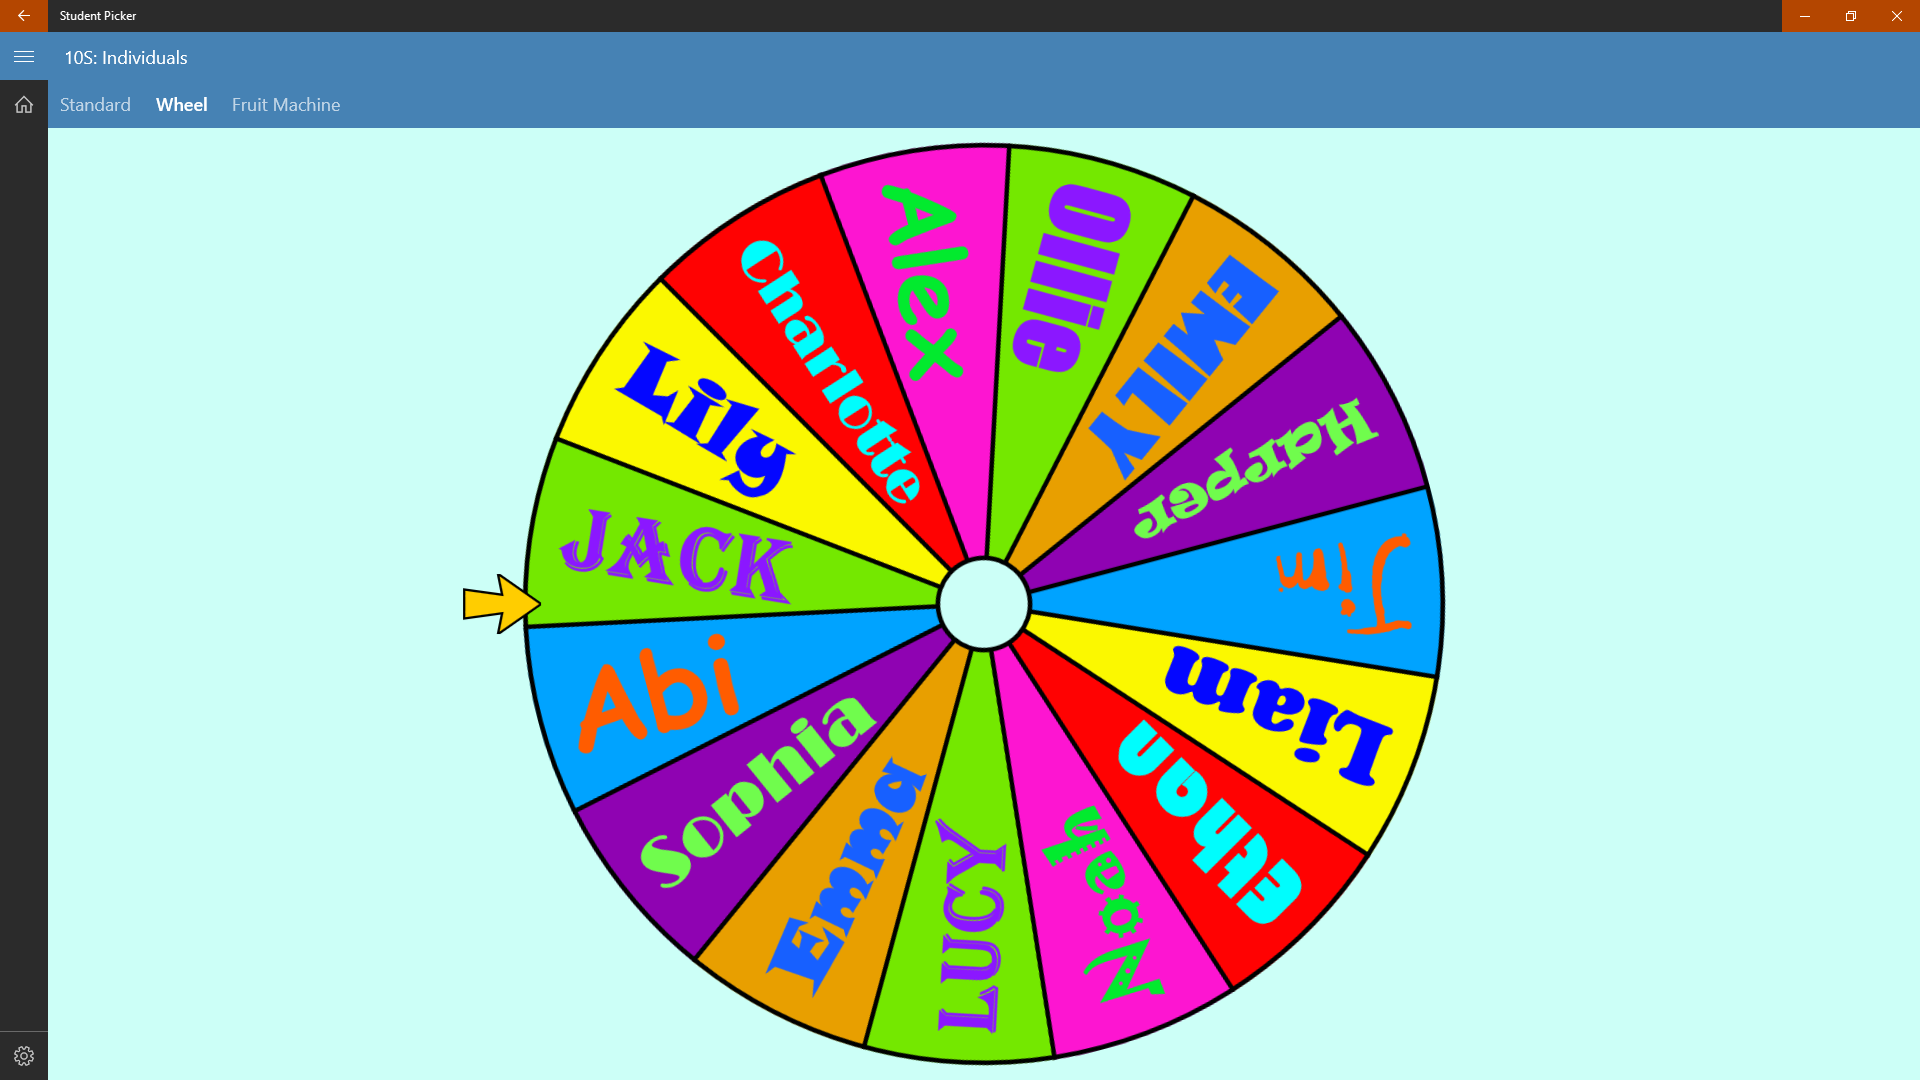 random name picker wheel